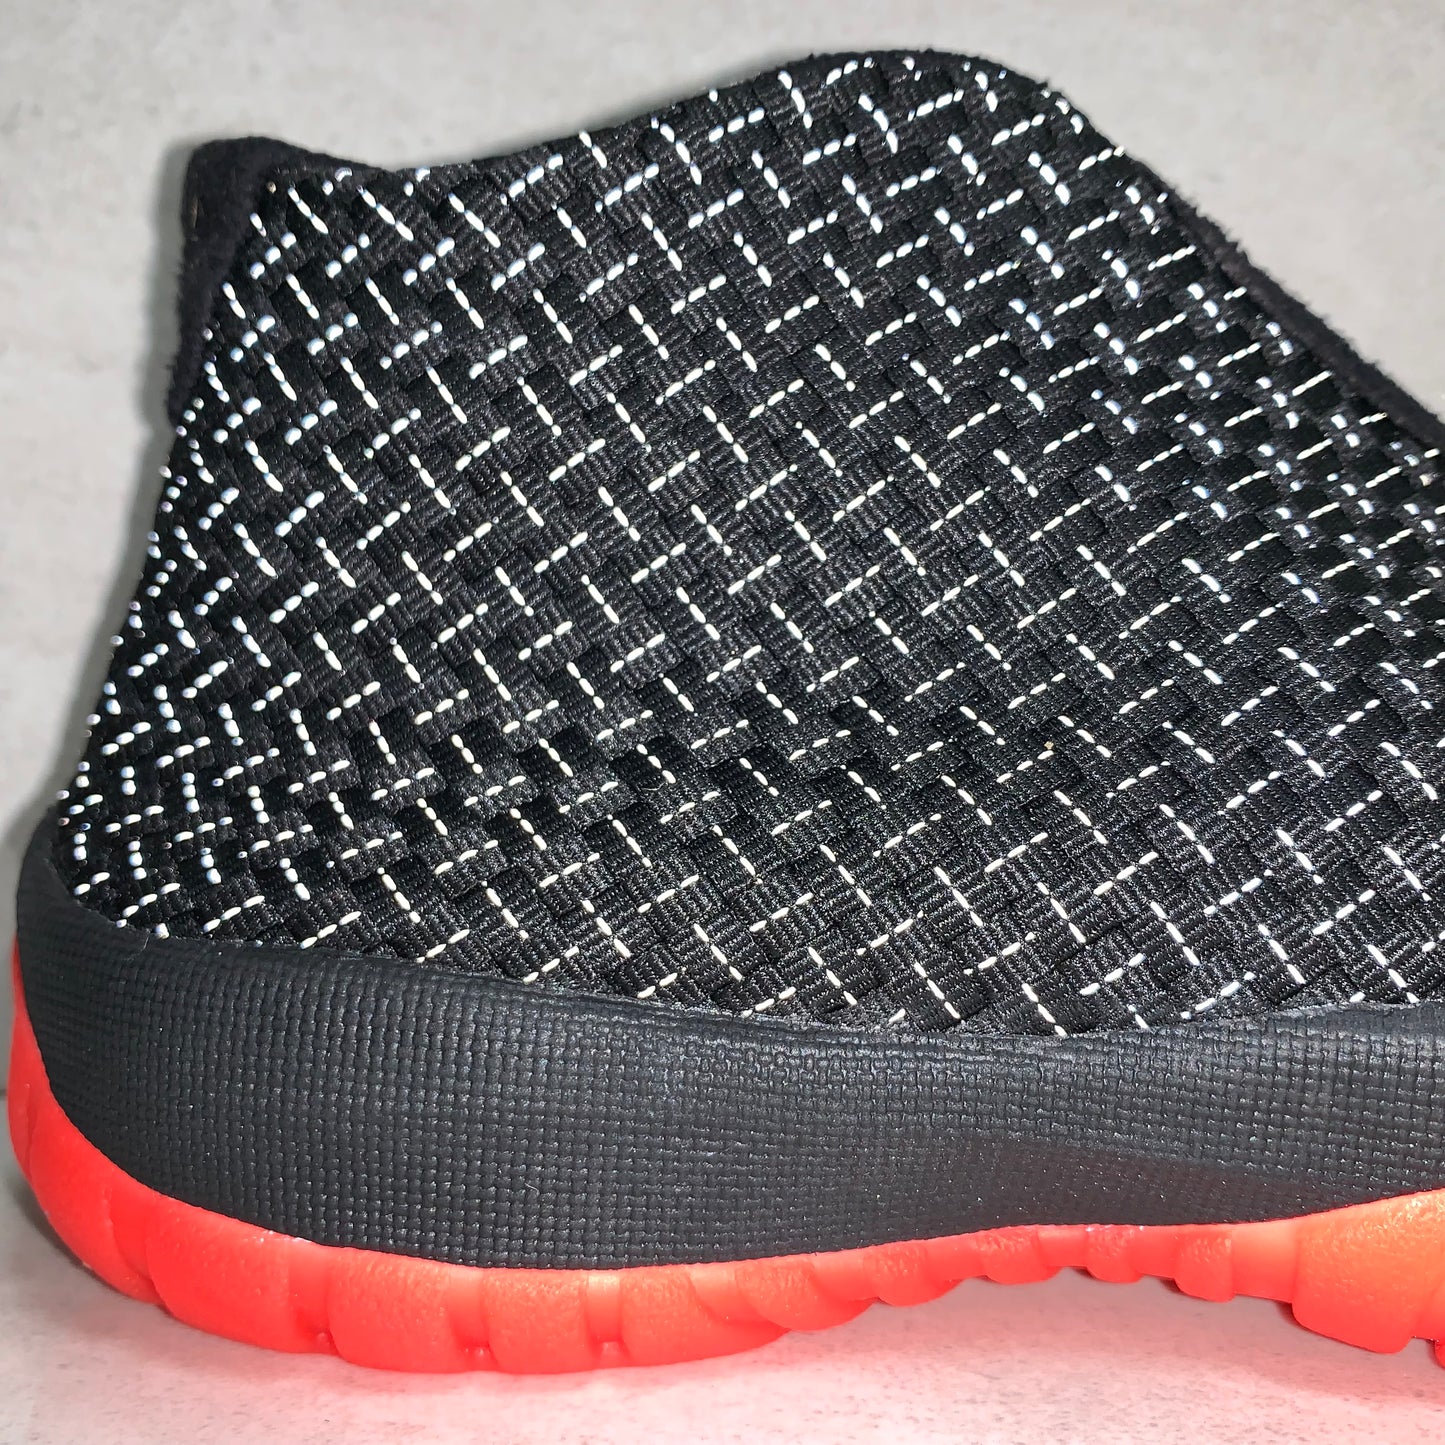 Jordan Future Premium Size 9/Size 11.5 Black Infrared 652141 023